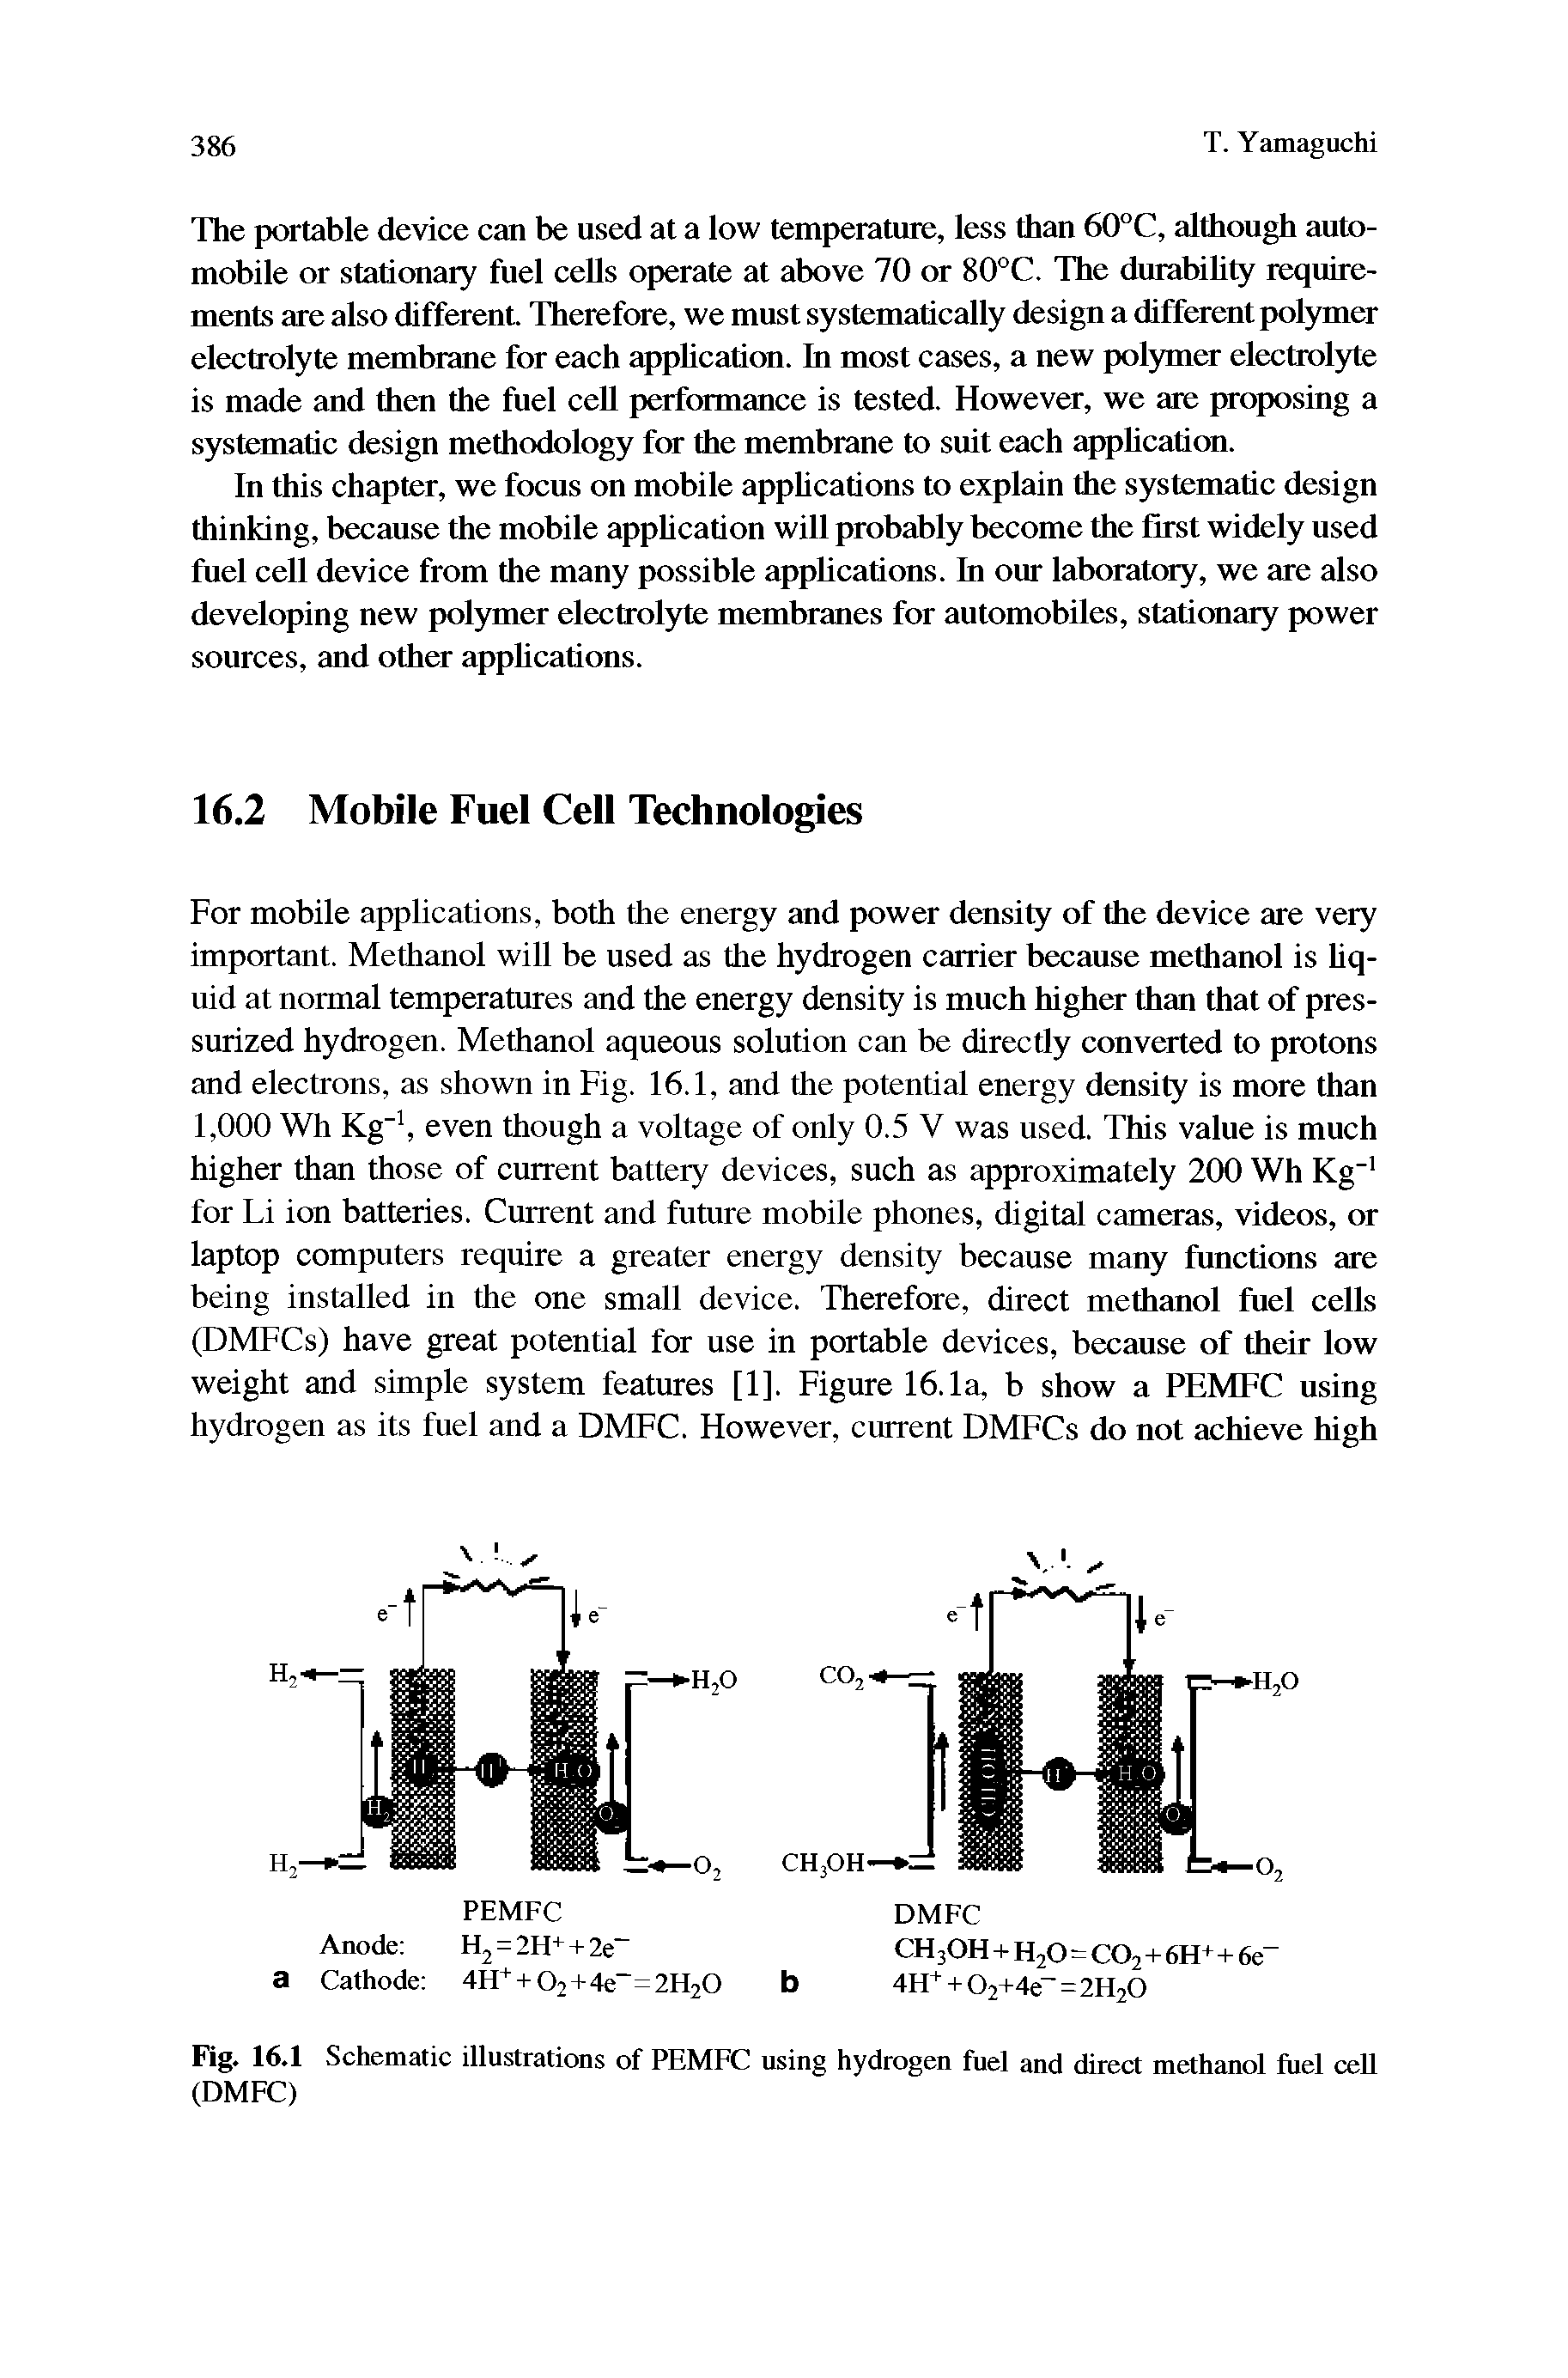 Fig. 16.1 Schematic illustrations of PEMFC using hydrogen fuel and direct methanol fuel ceU (DMFC)...